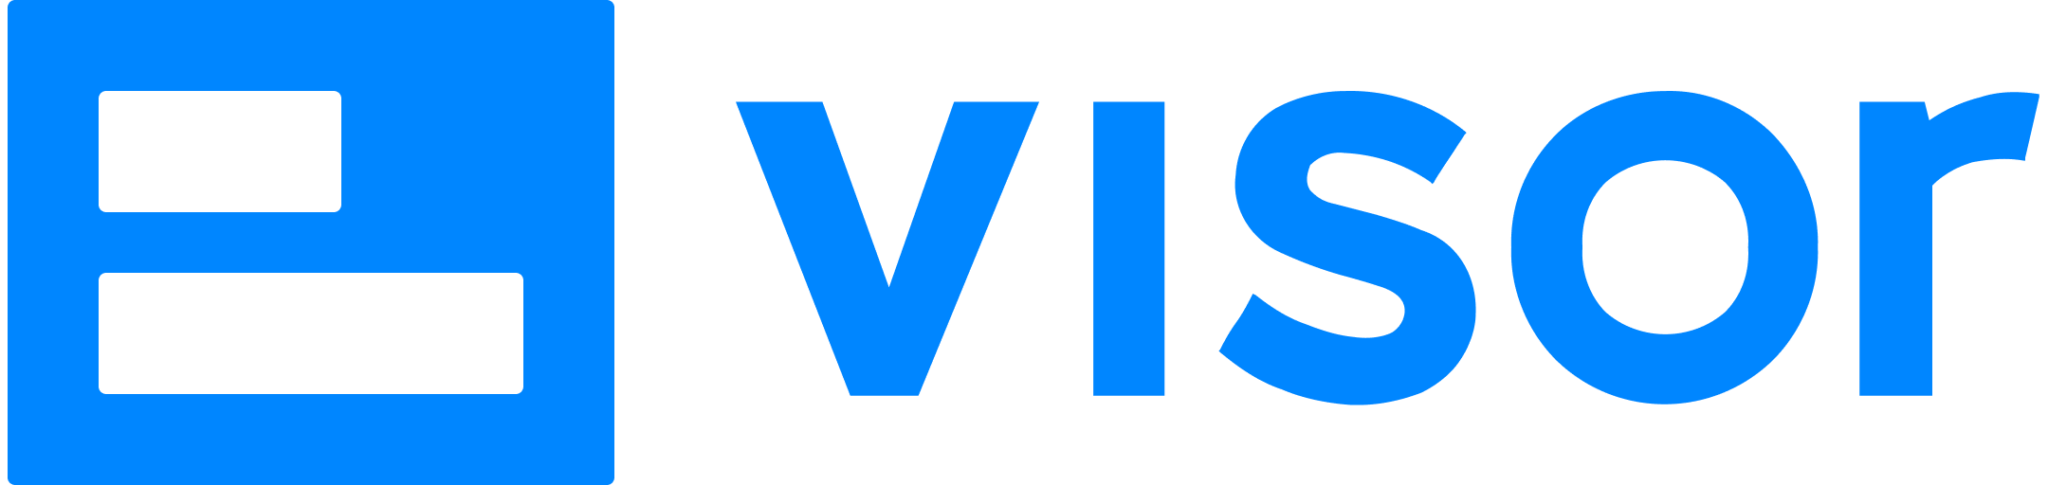 visor logo blue monochrome